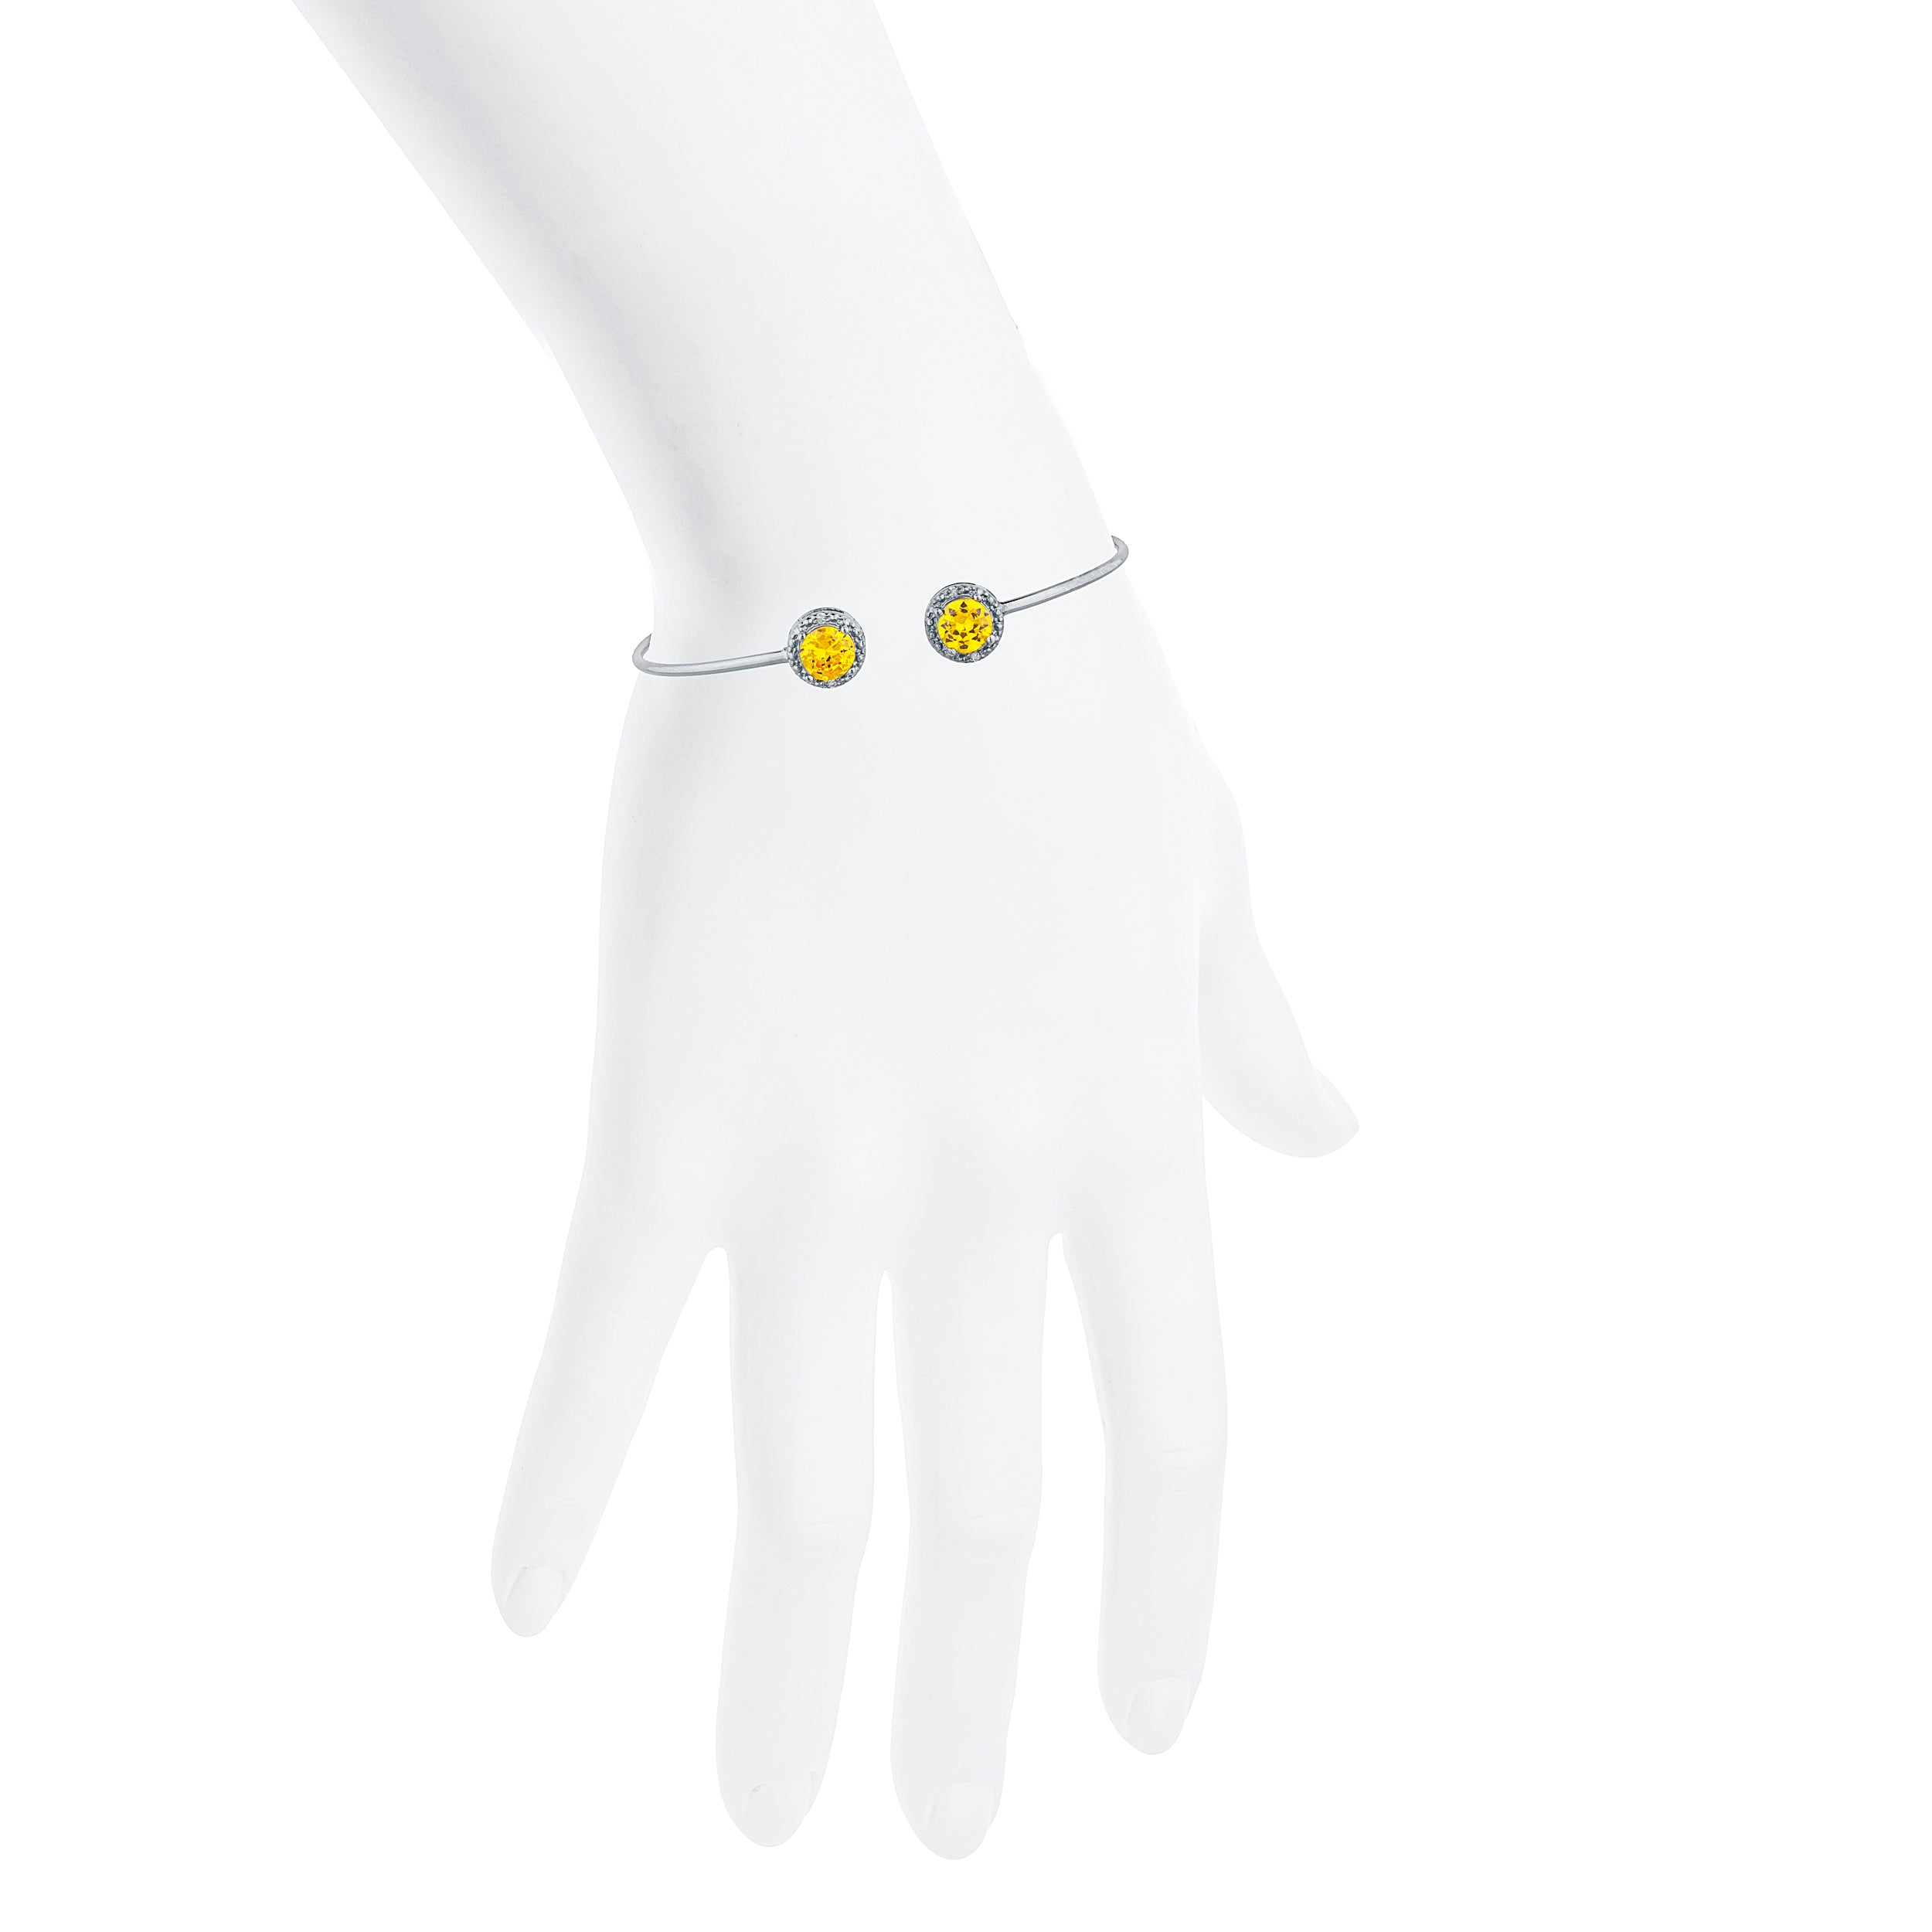 14Kt Gold Yellow Citrine & Diamond Round Bangle Bracelet